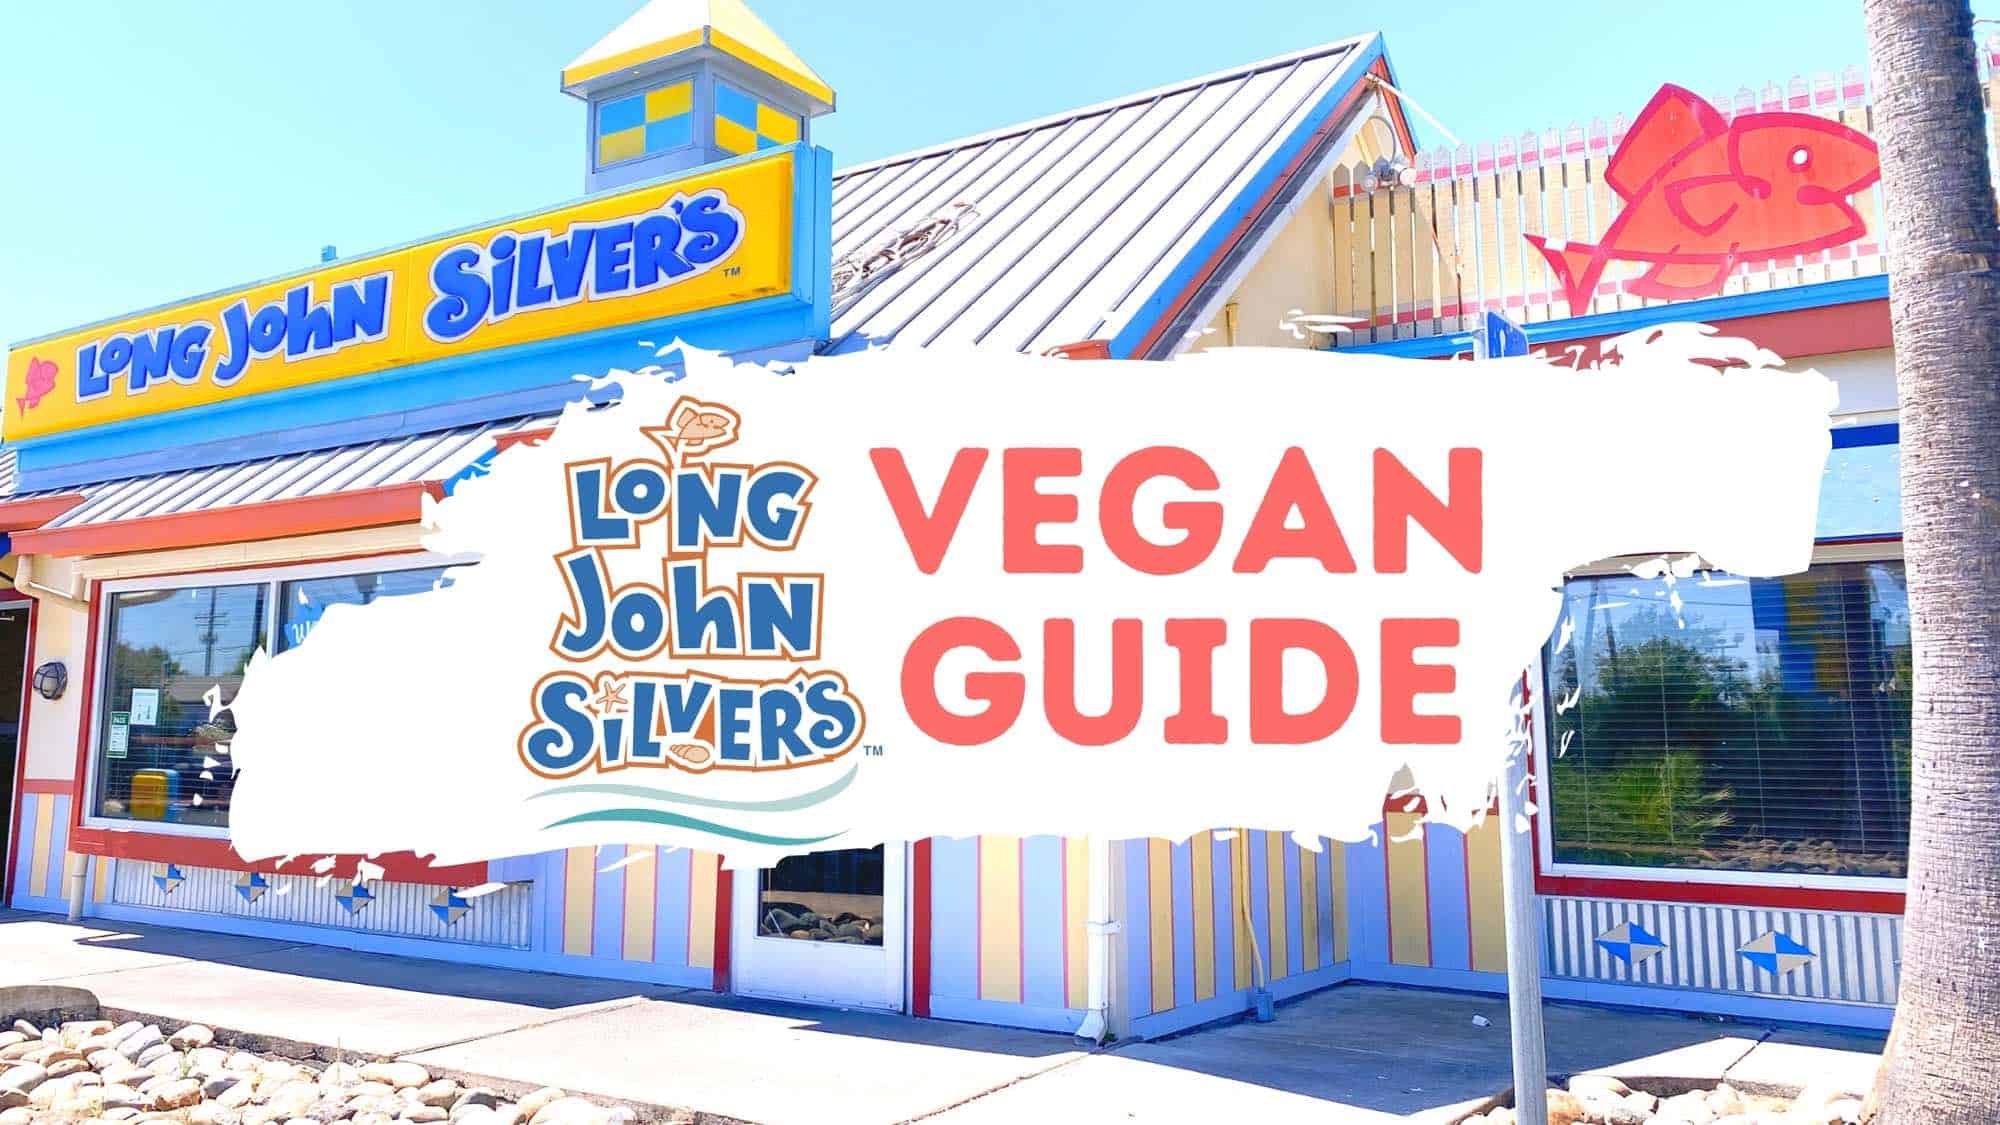 Long John Silvers Vegan Guide How to Order